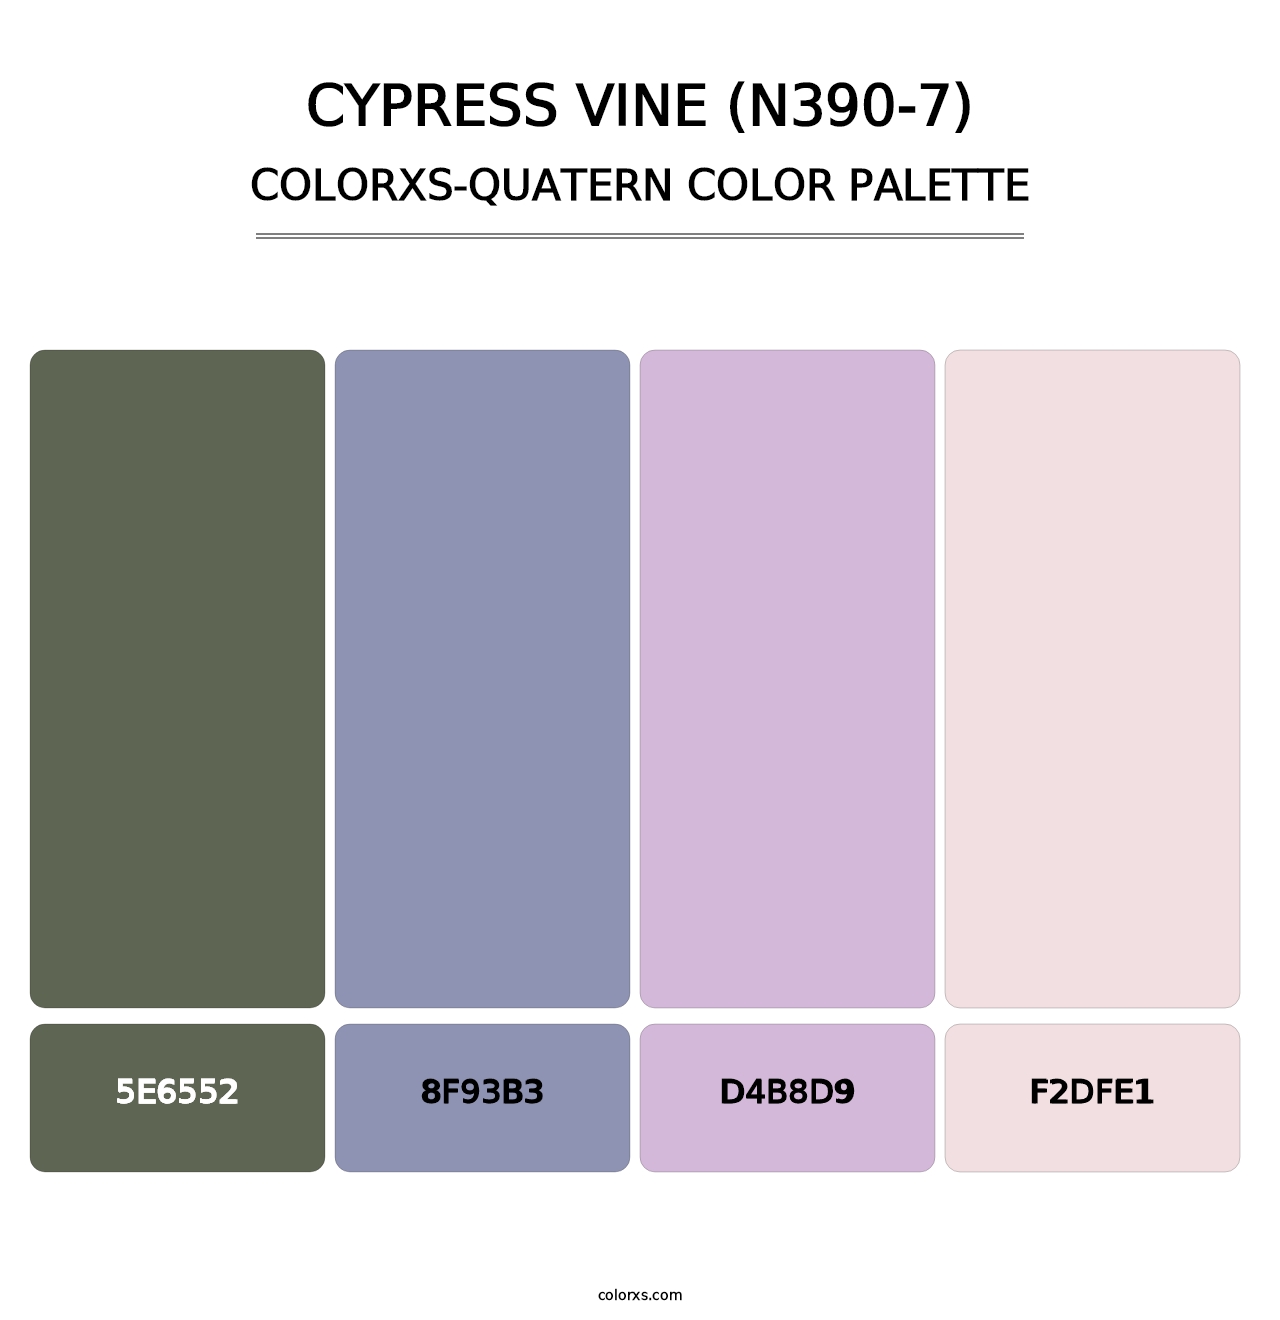 Cypress Vine (N390-7) - Colorxs Quatern Palette